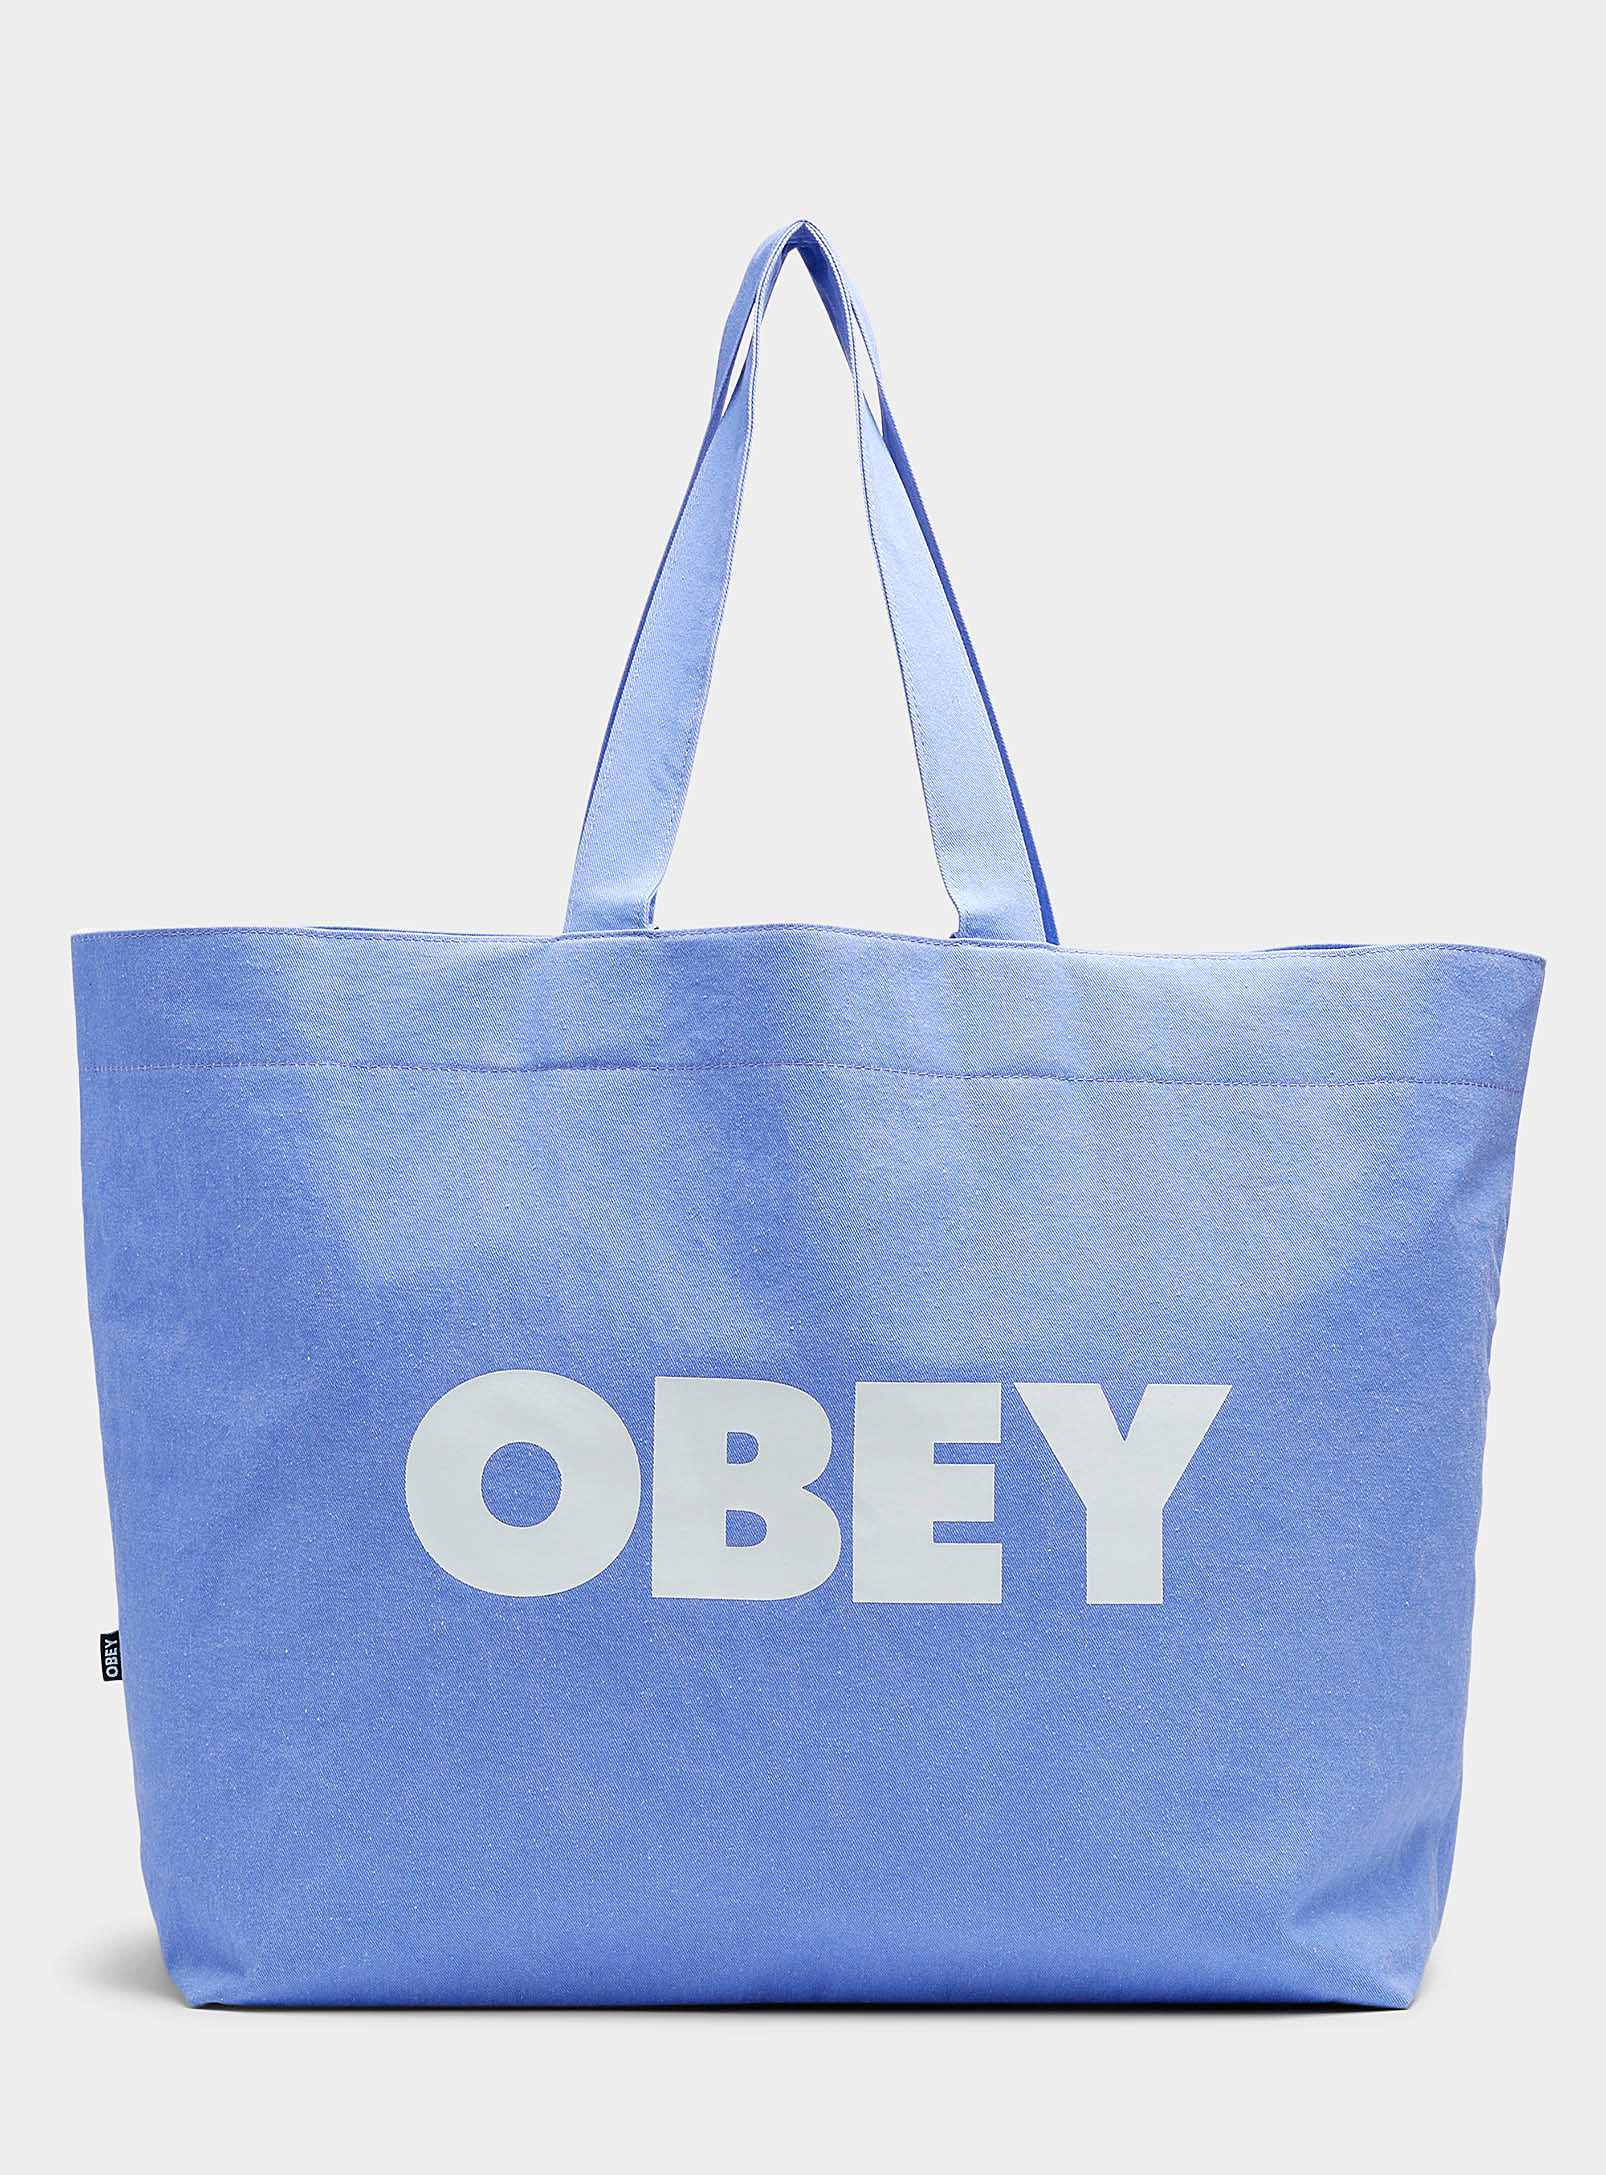 Obey - Men's Large pastel purple Tote Bag